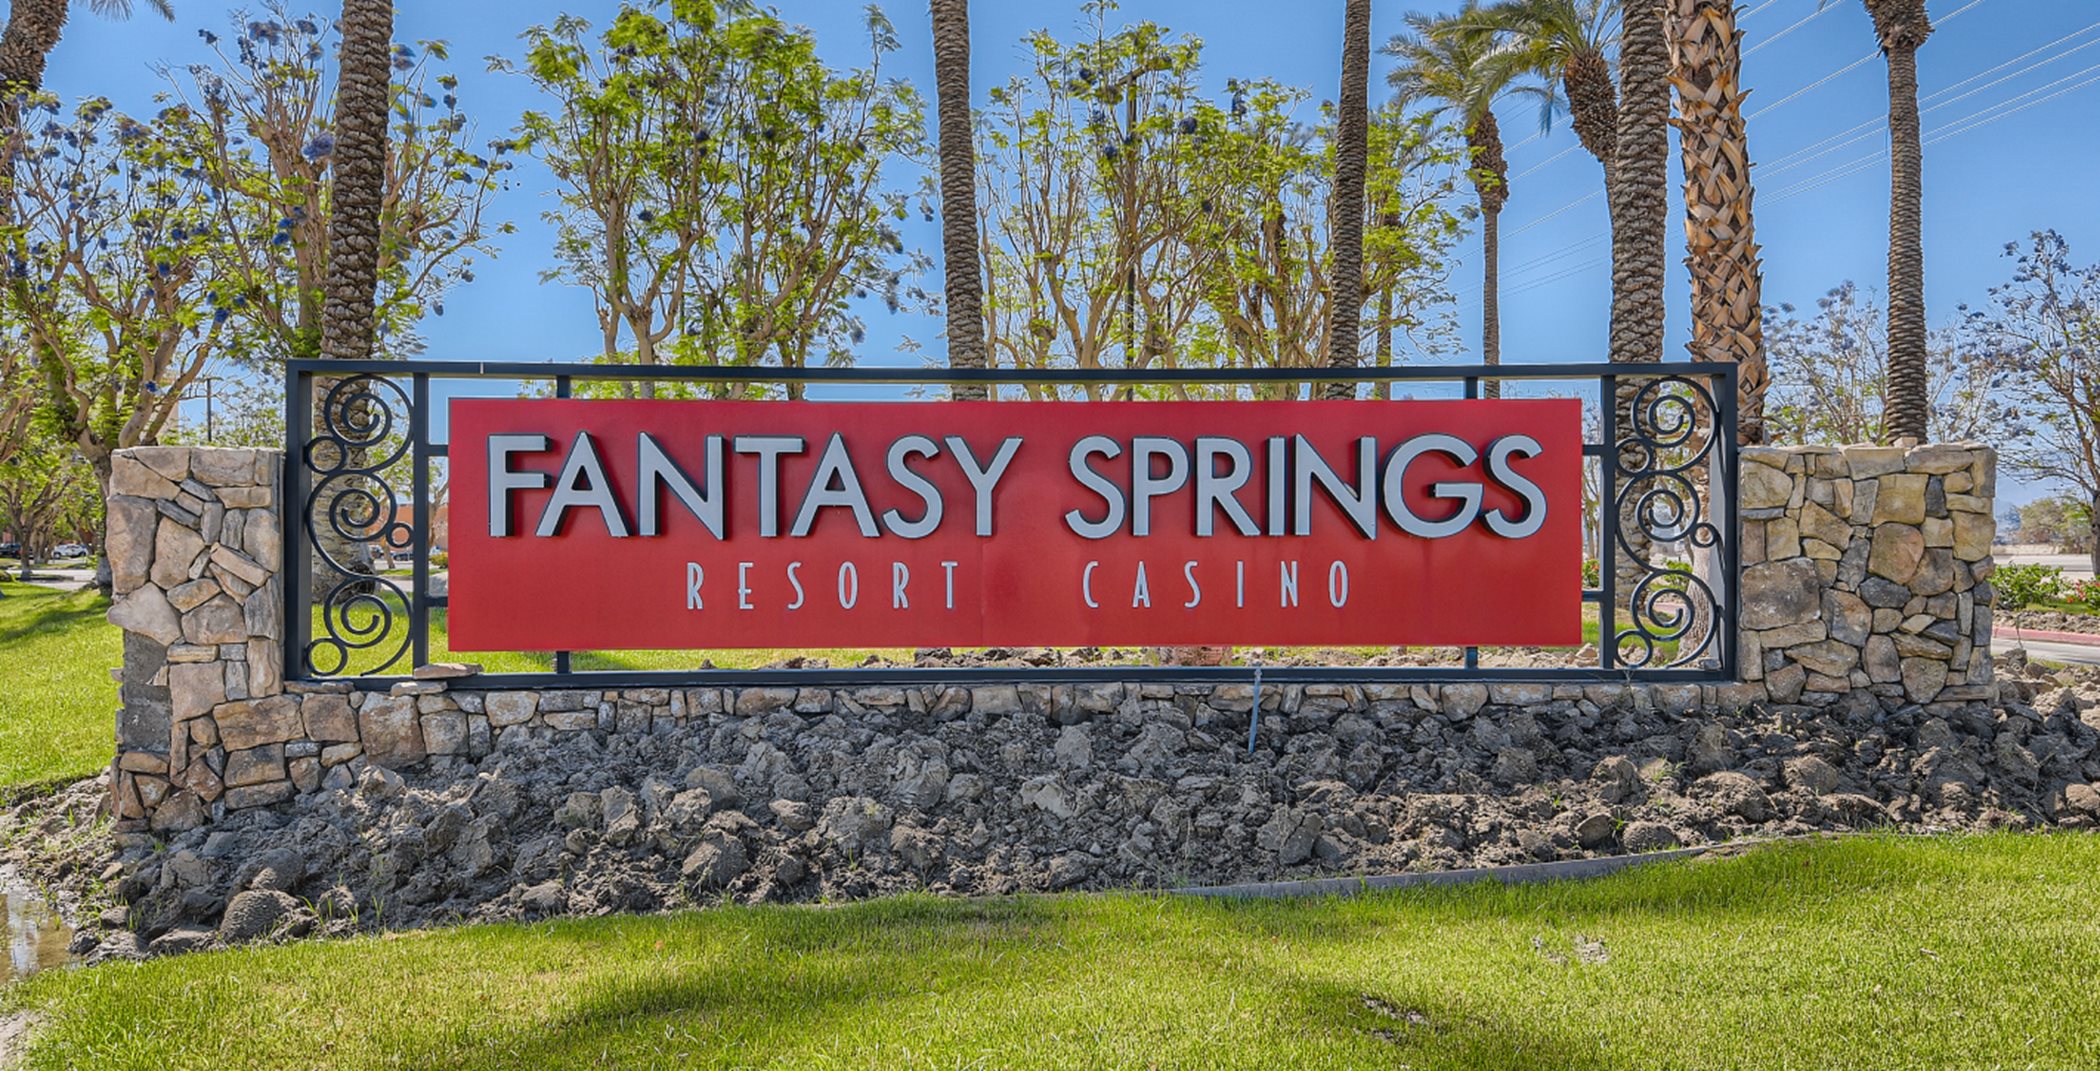 Fantasy Springs entry sign